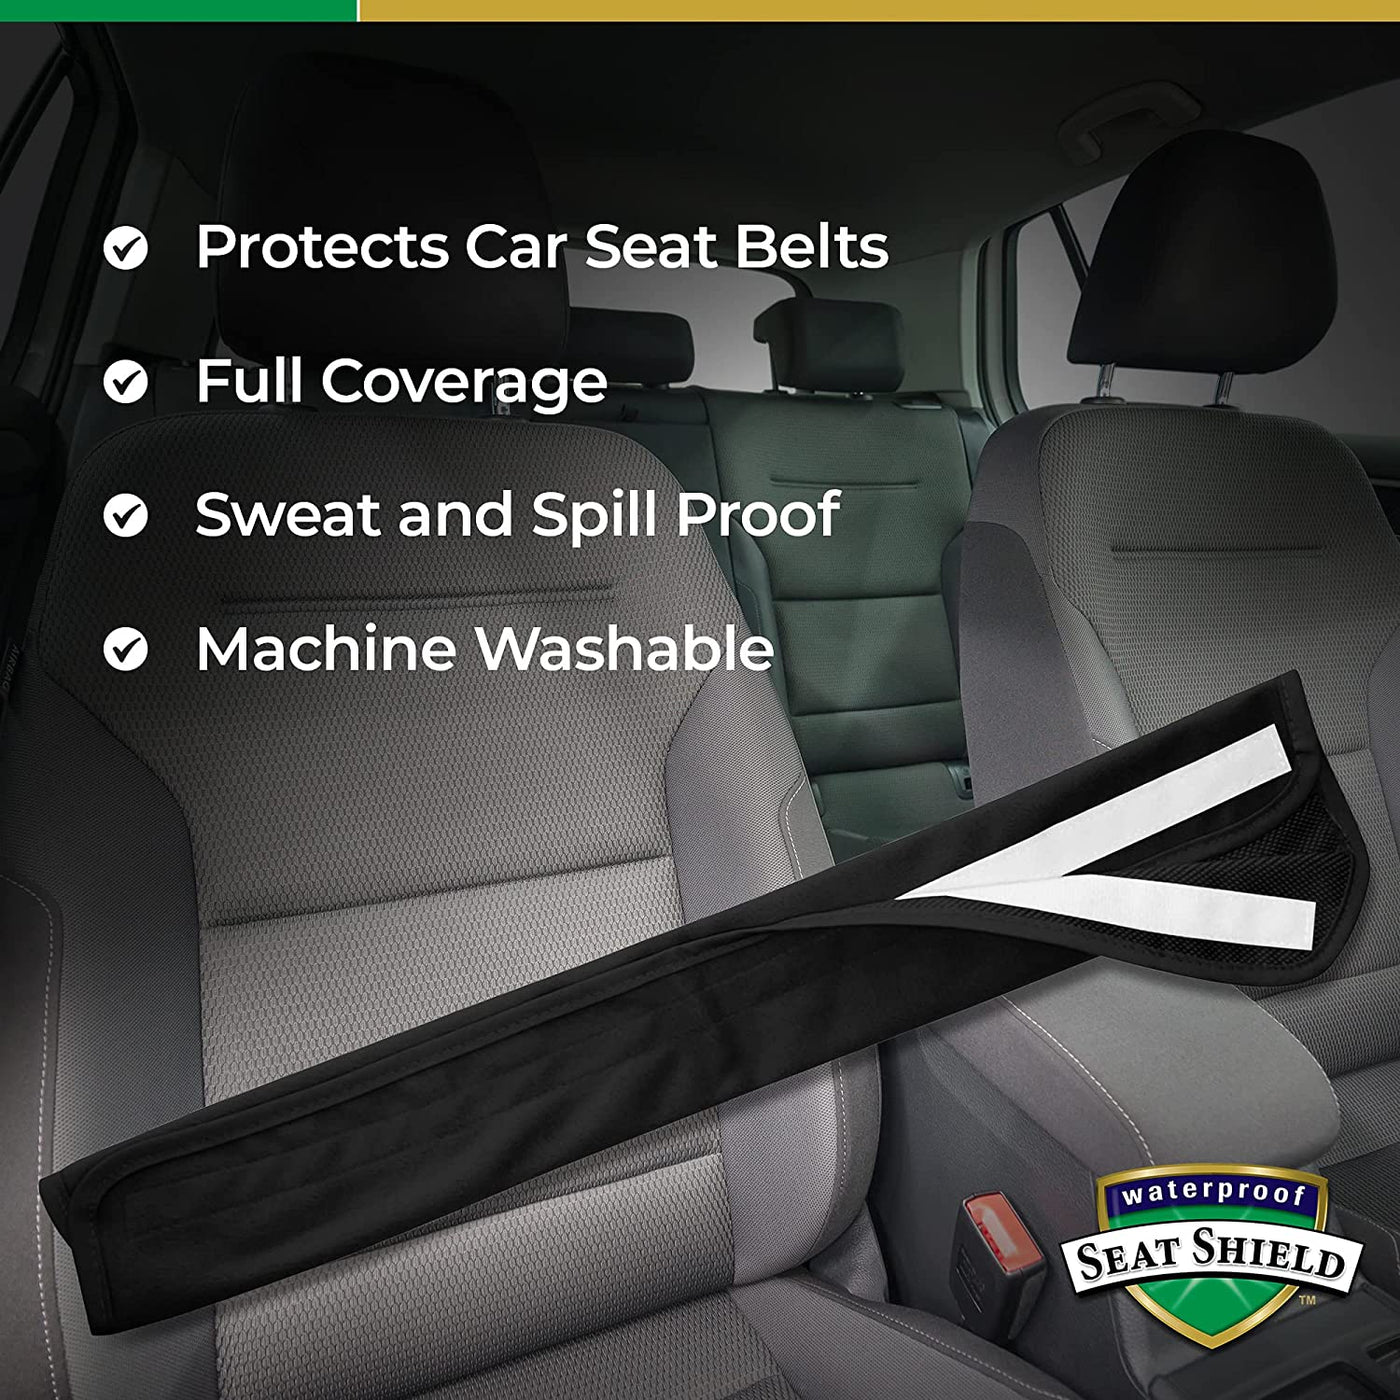 Waterproof Seat Belt Cover - Machine Washable Black